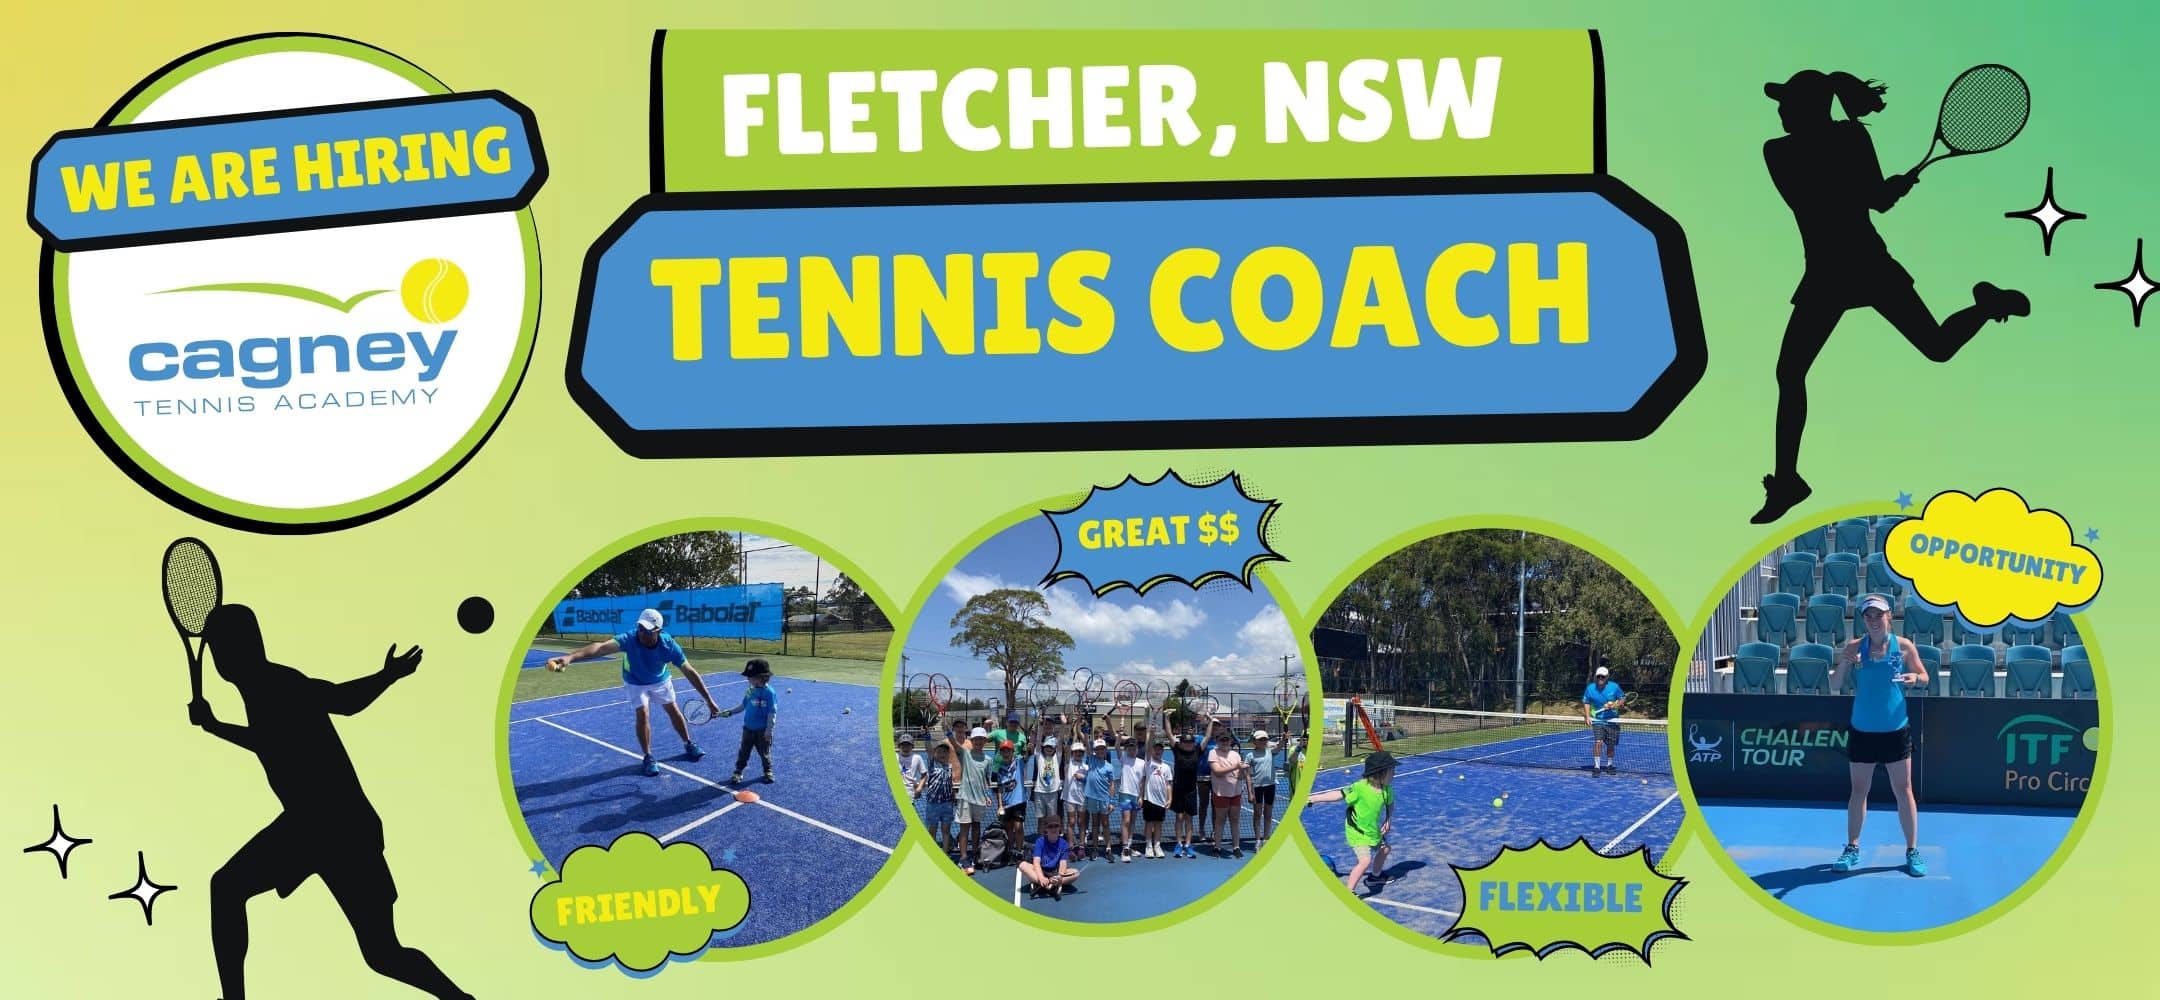 Now Hiring - Tennis Jobs NSW